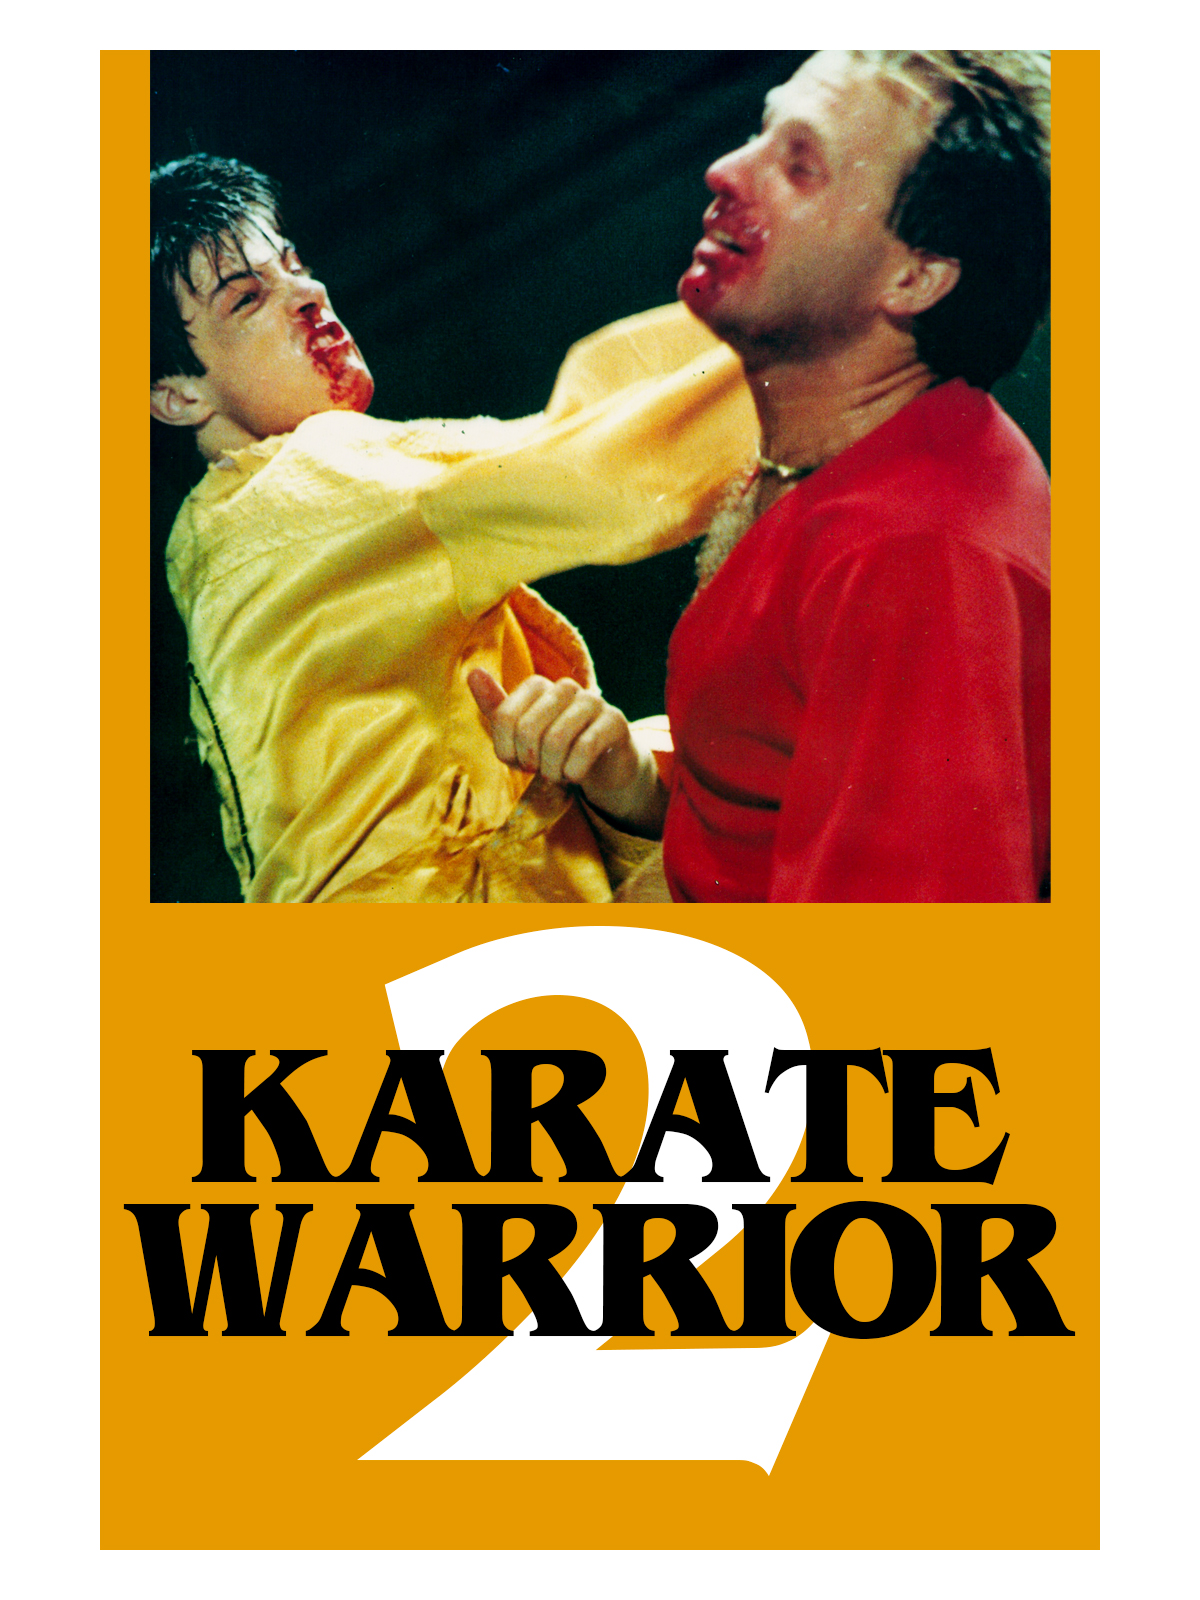 Karate Warrior II